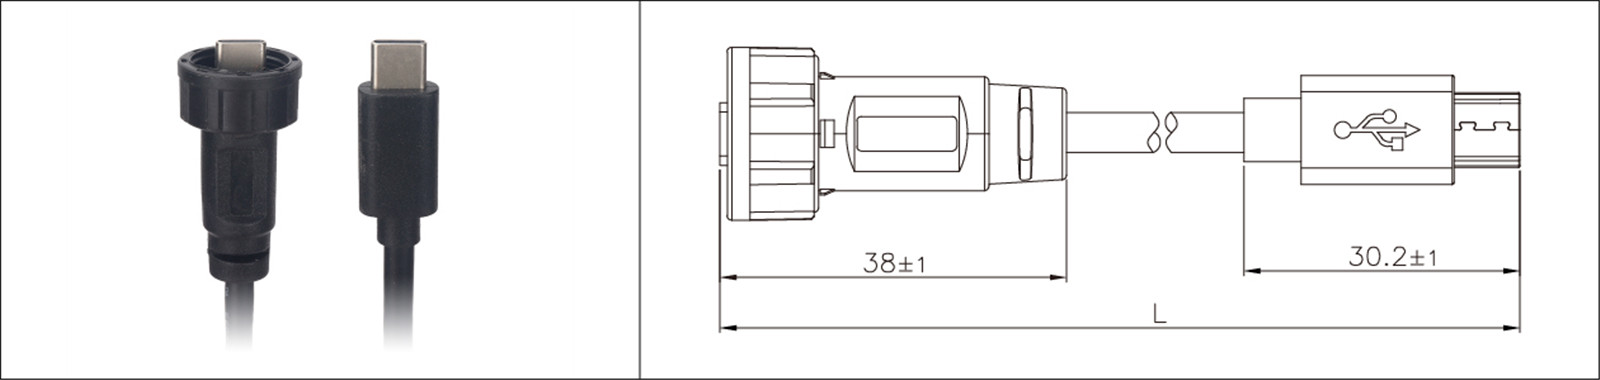 Pemasangan panel USB mikro tipe 2.0 3.0 betina dan jantan tahan air IP67 kabel ekstensi overmold konektor industri-02 (7)